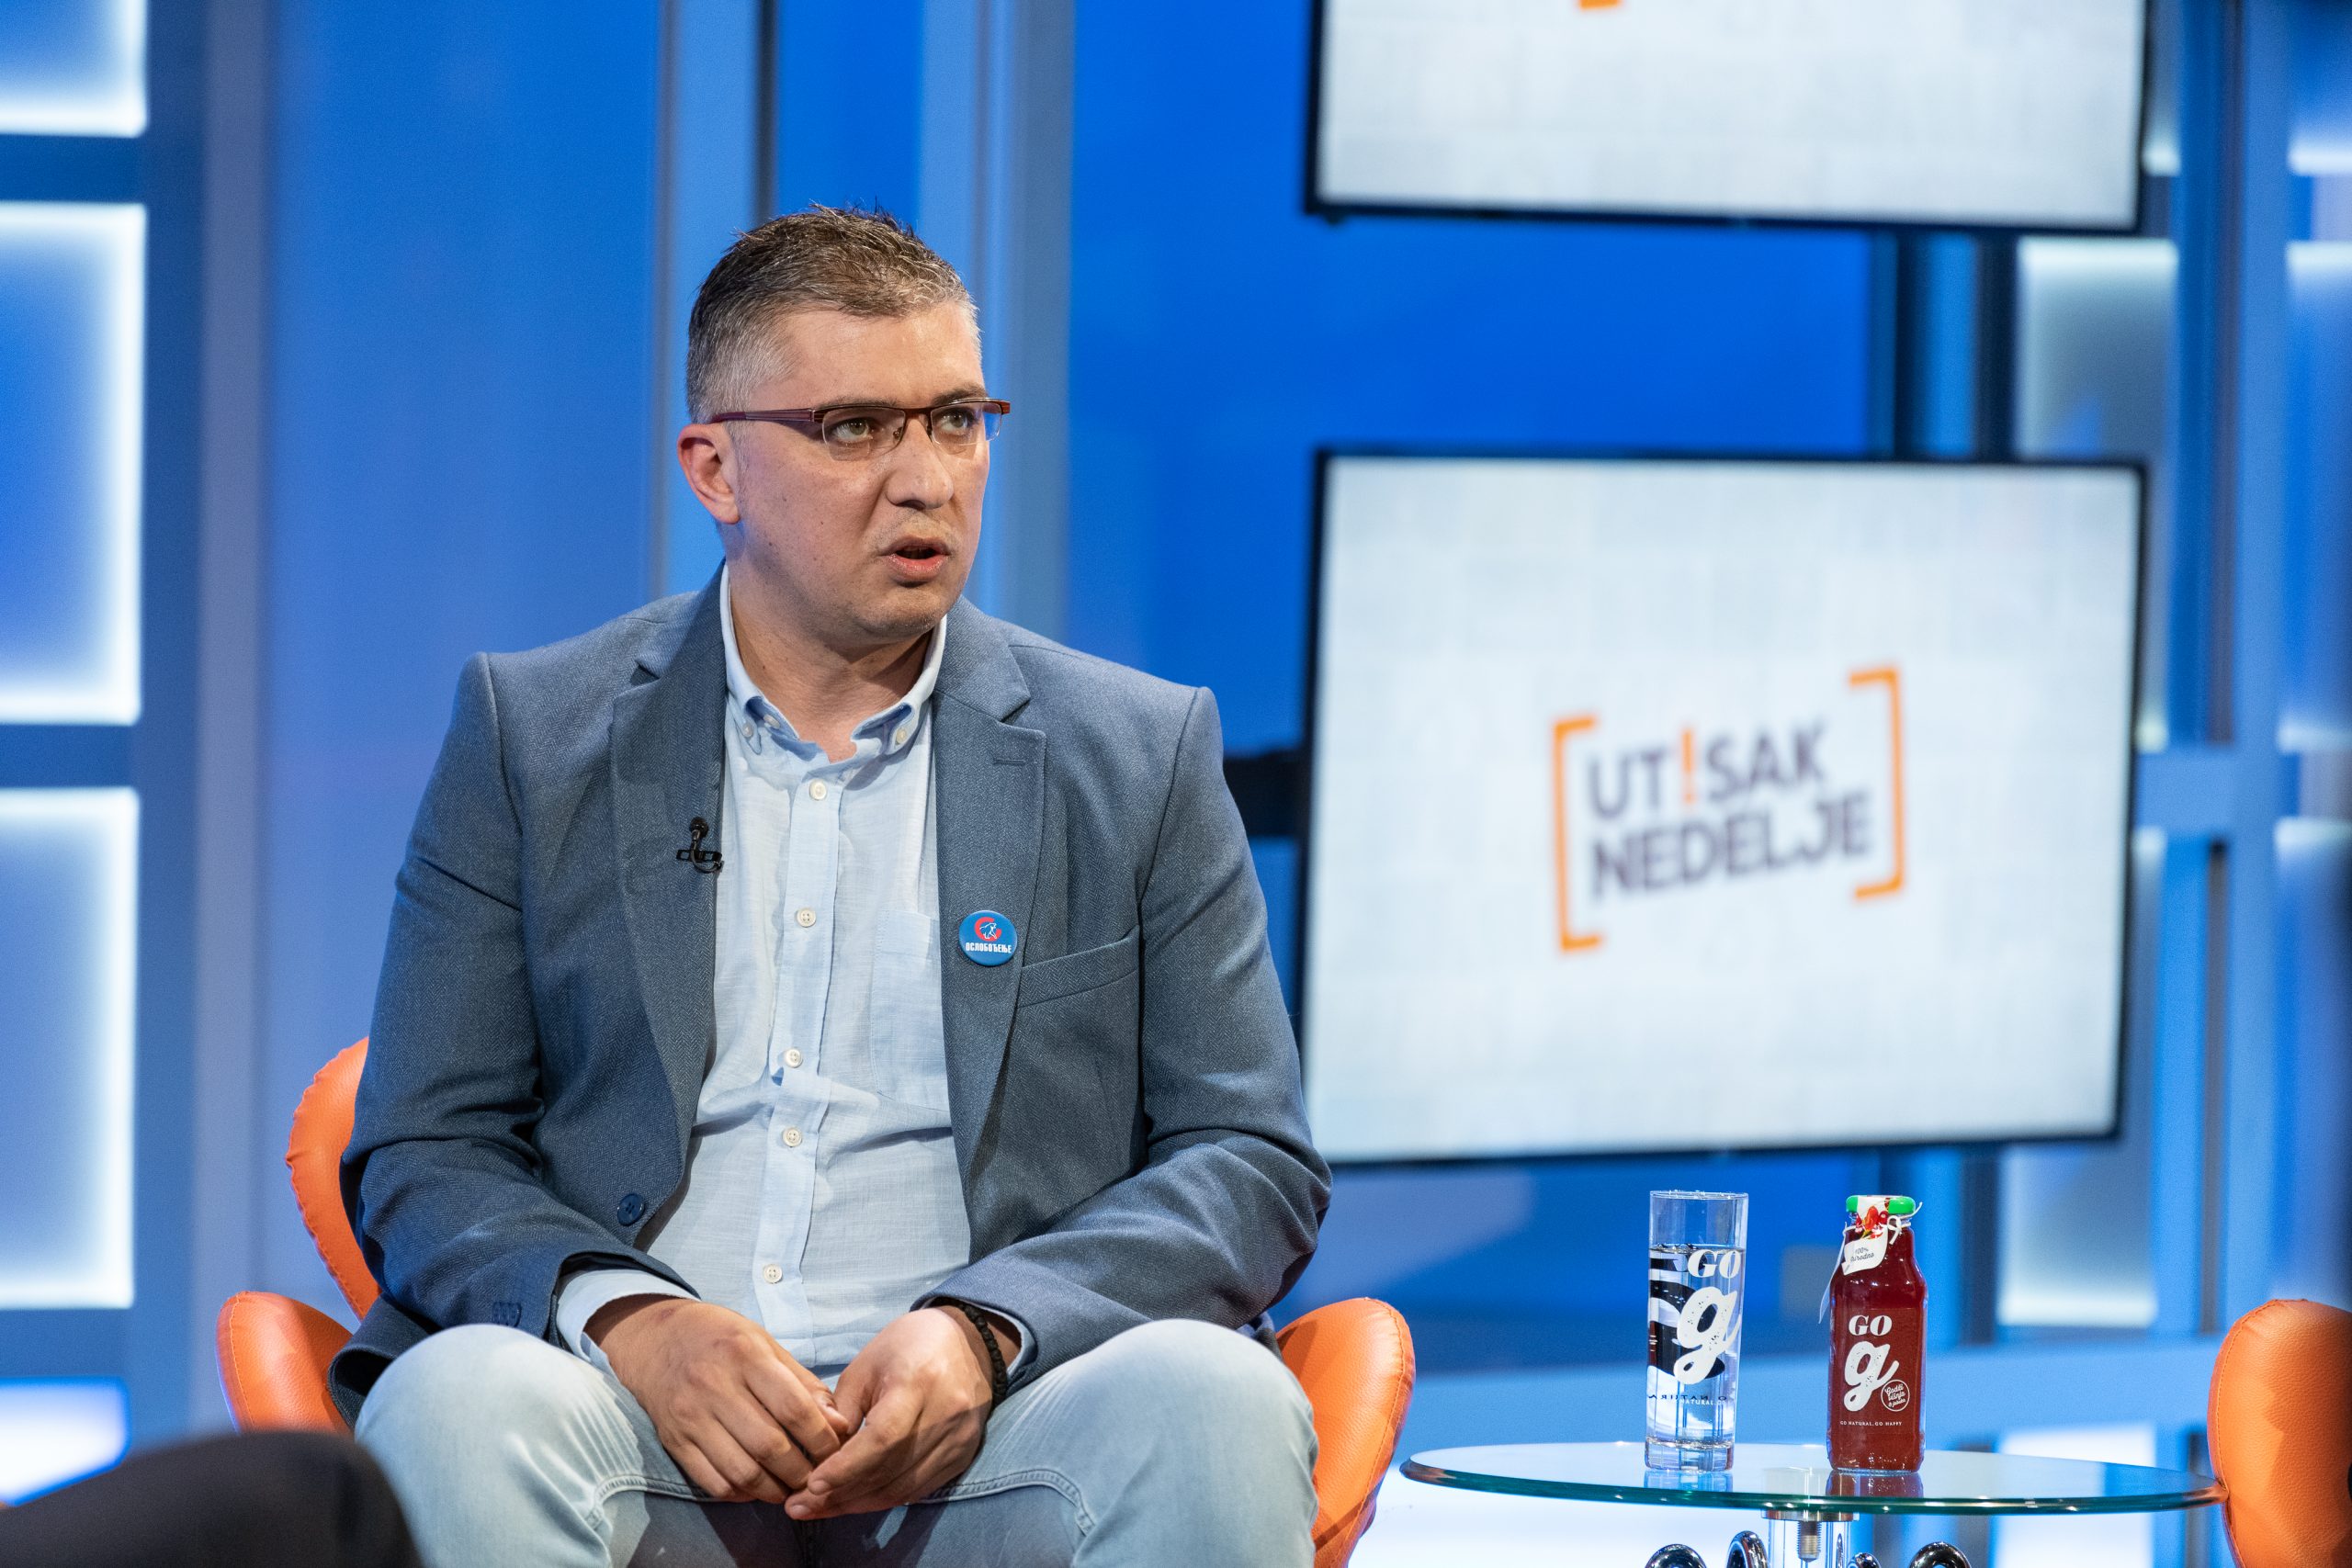 Milan Dumanović, emisija Utisak nedelje